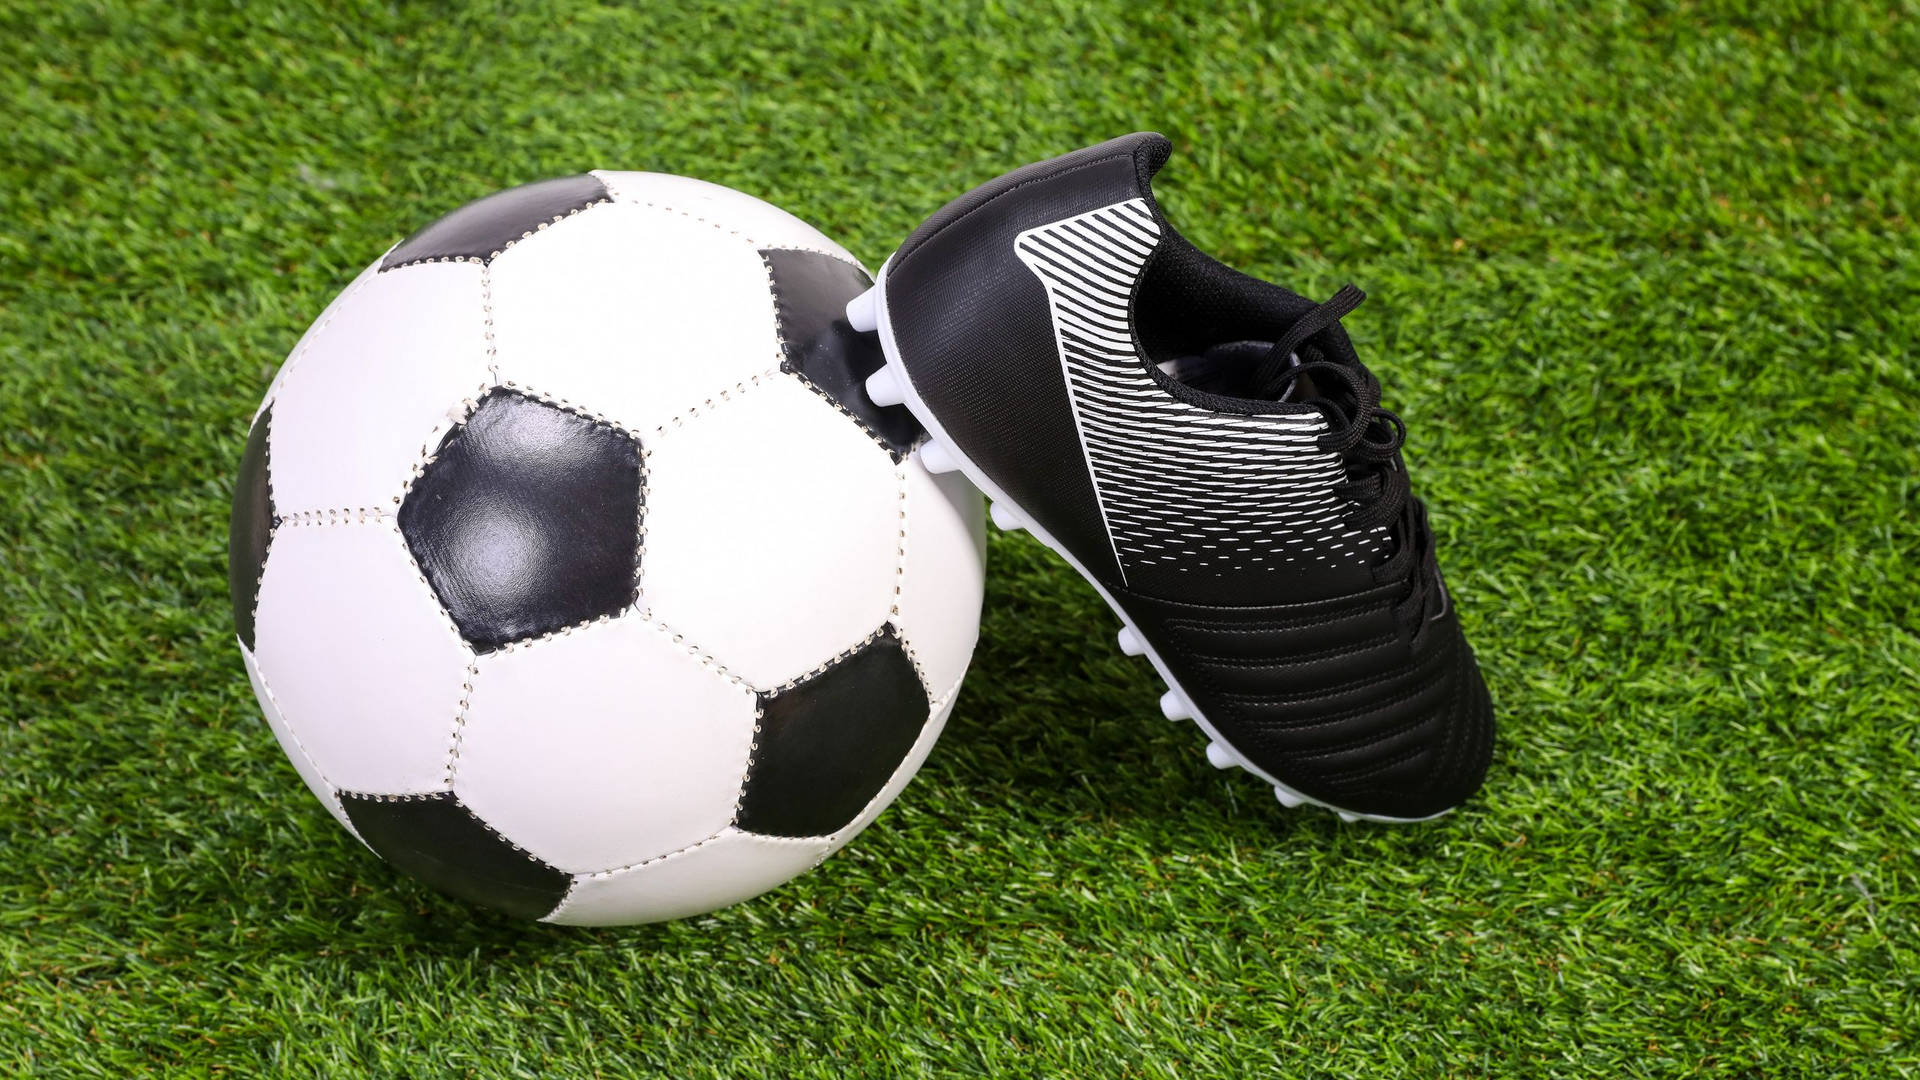 2560x1440 Soccer Ball And Shoe Wallpaper